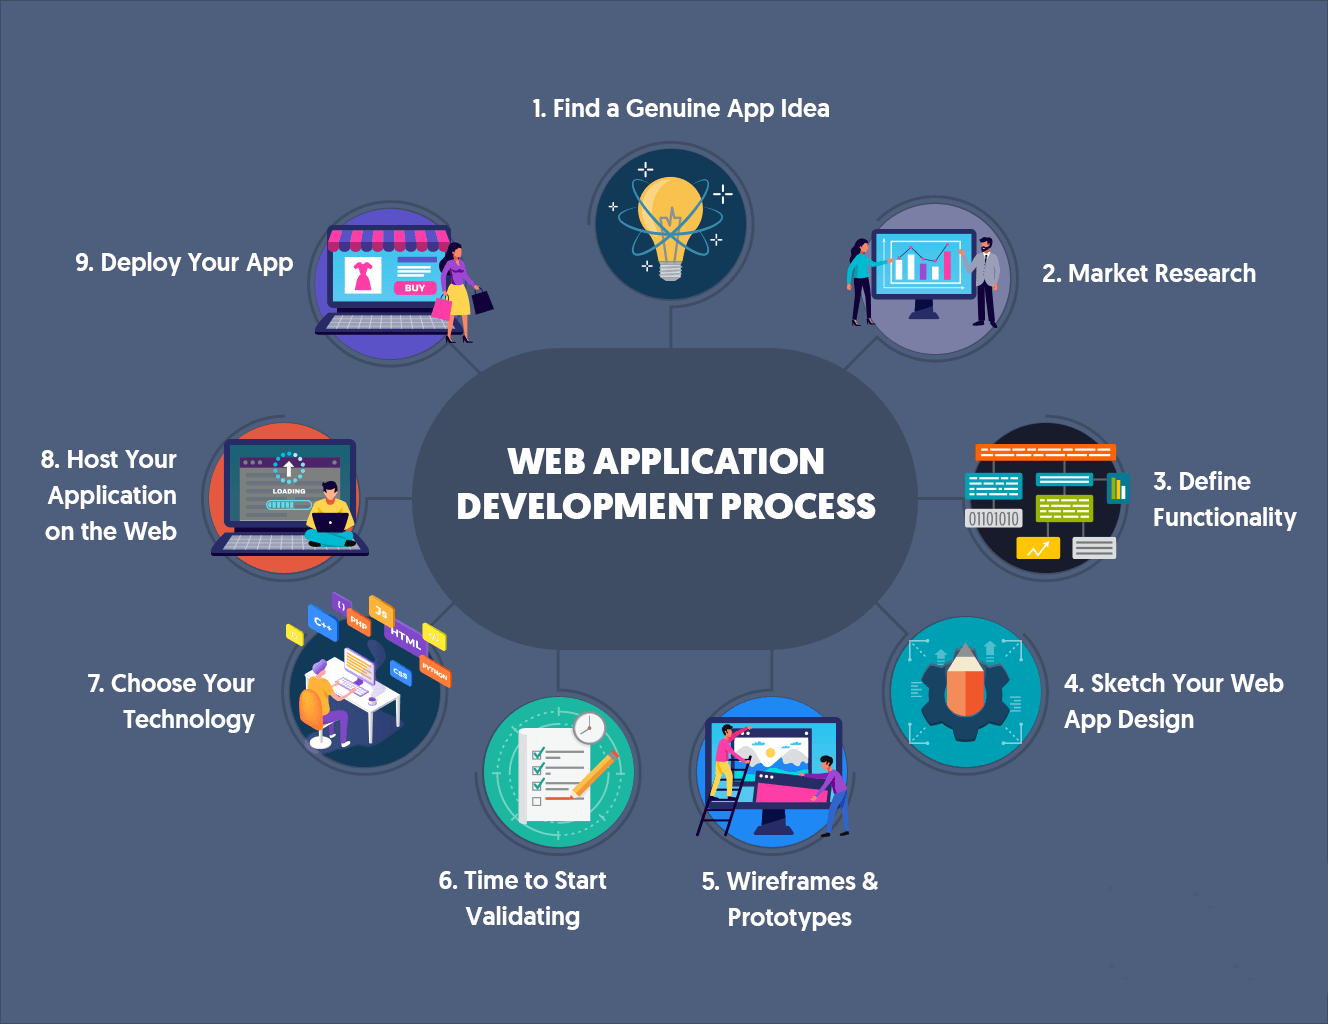 Web App Development Services: Improve Your Company